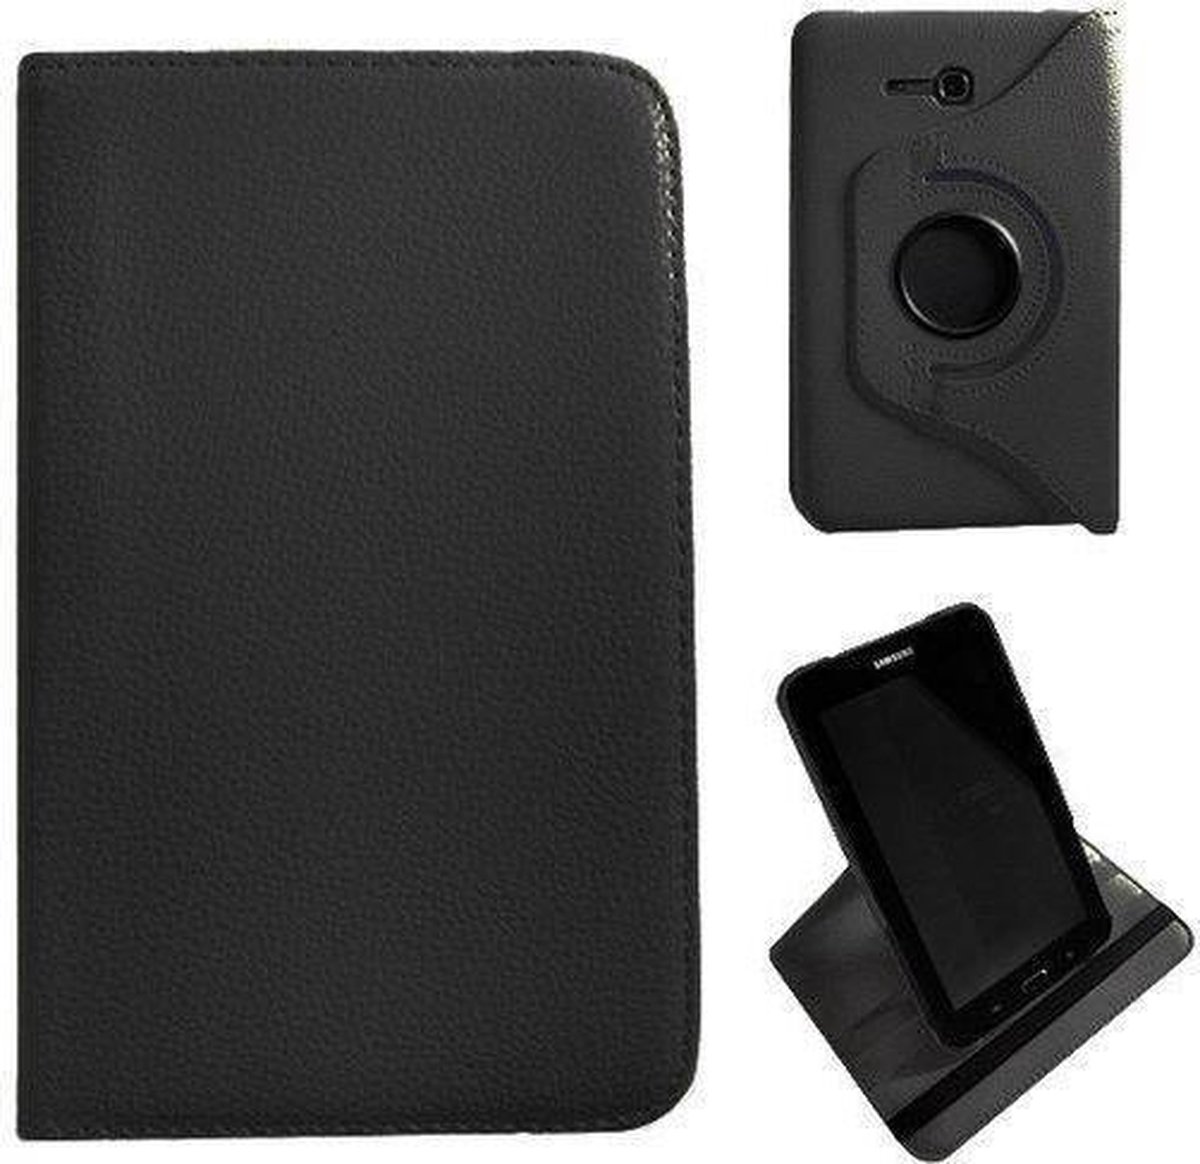 Samsung Galaxy Tab 3 T110 7 Inch Leather 360 Degree Rotating Case Black Zwart